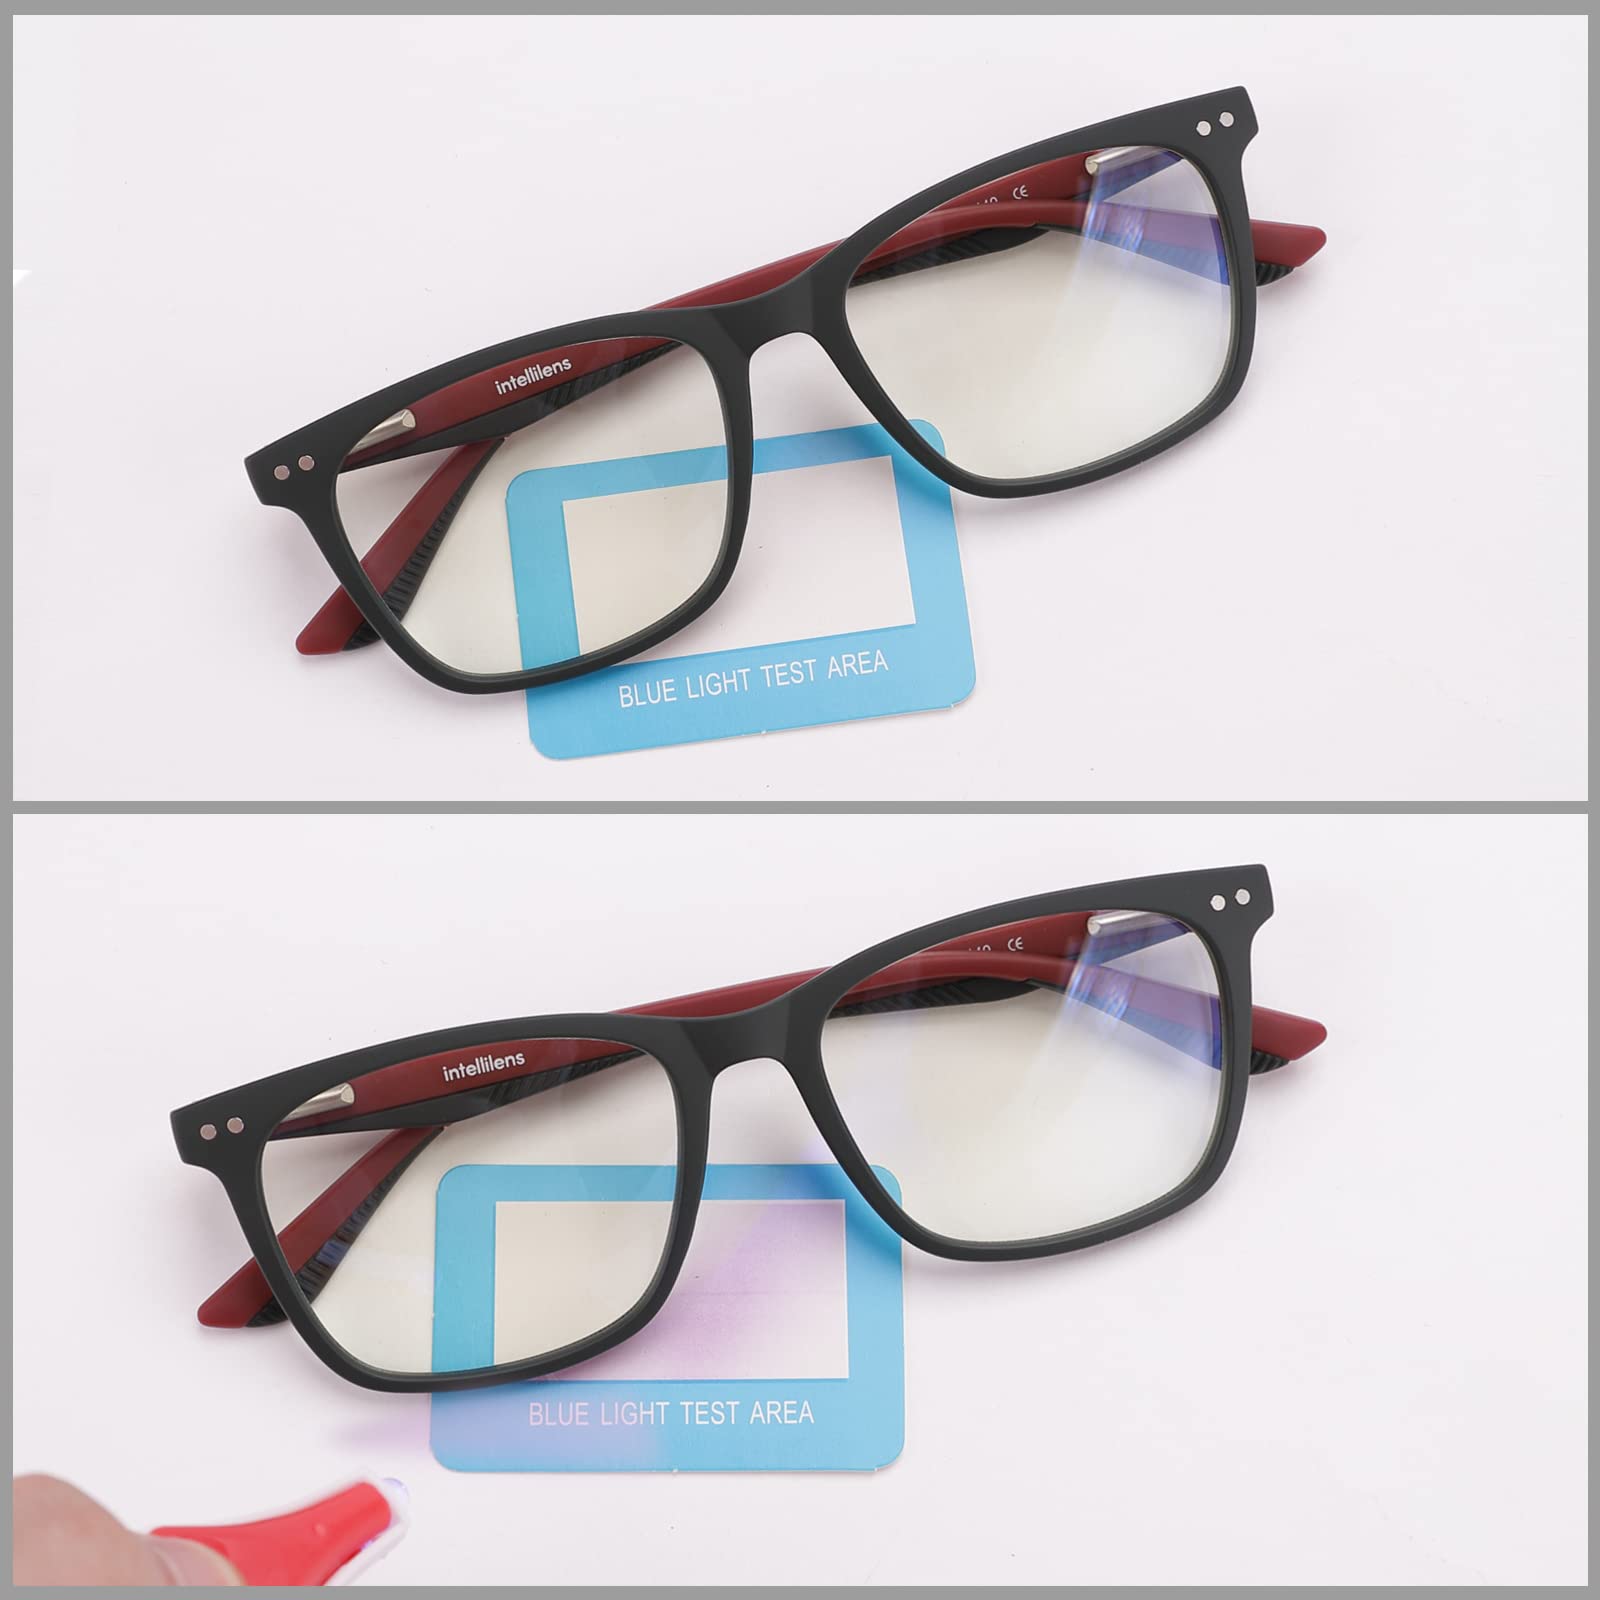 Intellilens Wayfarer Blue Cut Computer Glasses for Eye Protection | Zero Power, Anti Glare & Blue Light Filter Glasses | UV Protection Eye Glass for Men & Women (Green) (53-18-140)